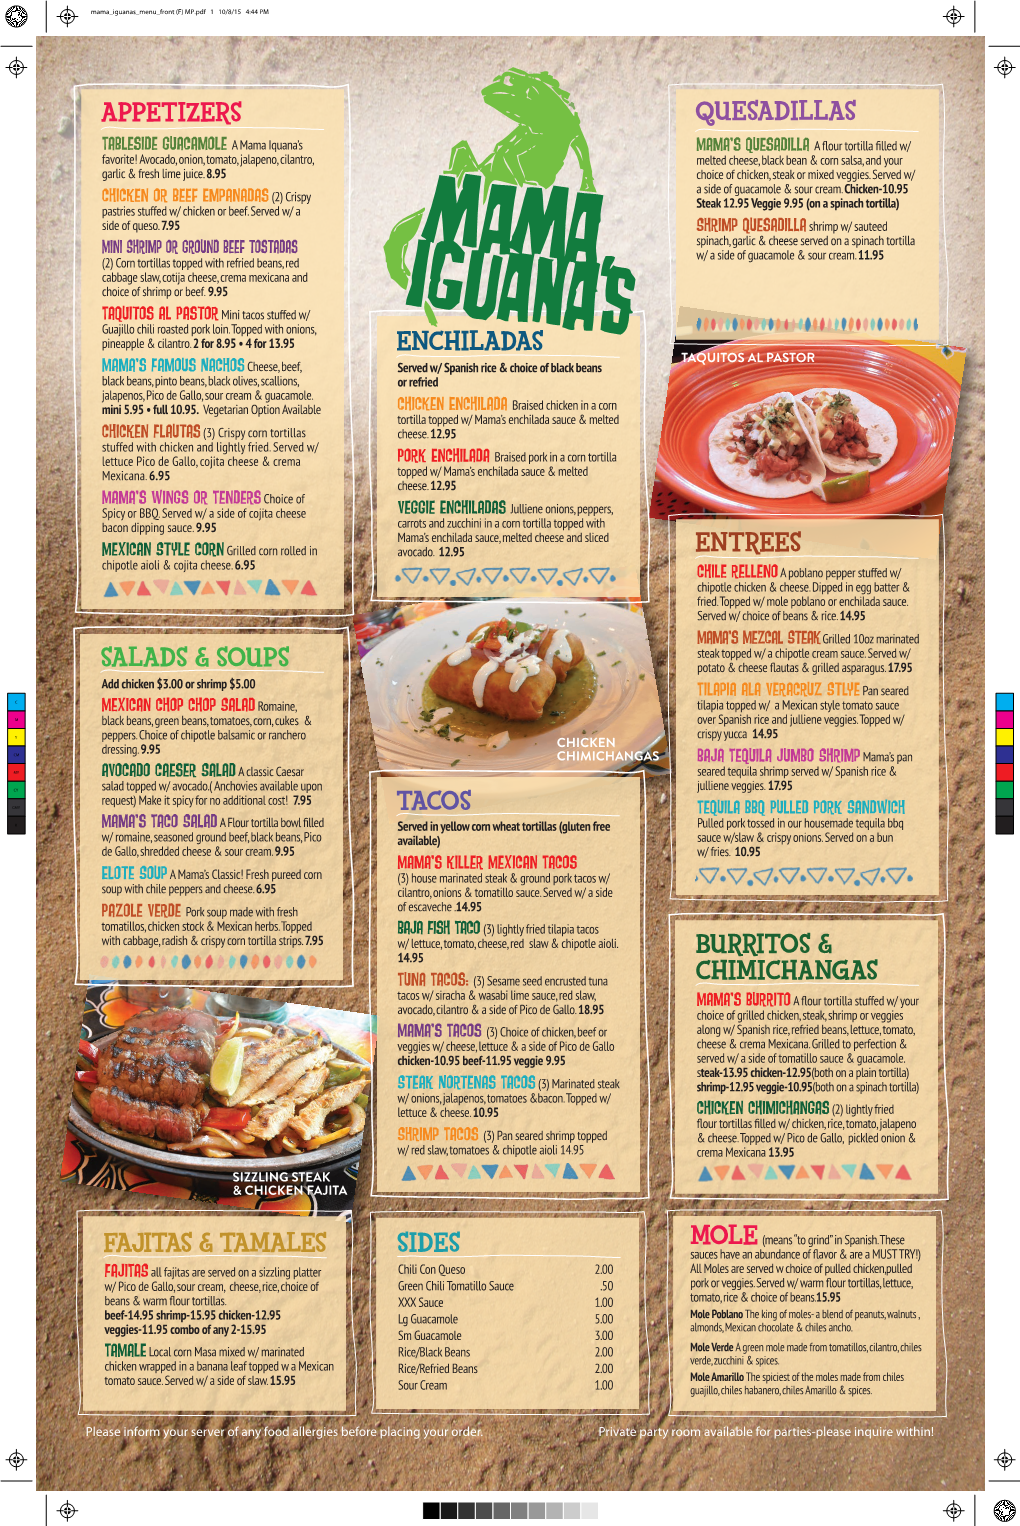 Appetizers Salads & Soups Burritos & Chimichangas Enchiladas Quesadillas Sides Tacos Entrees Fajitas & Tamales